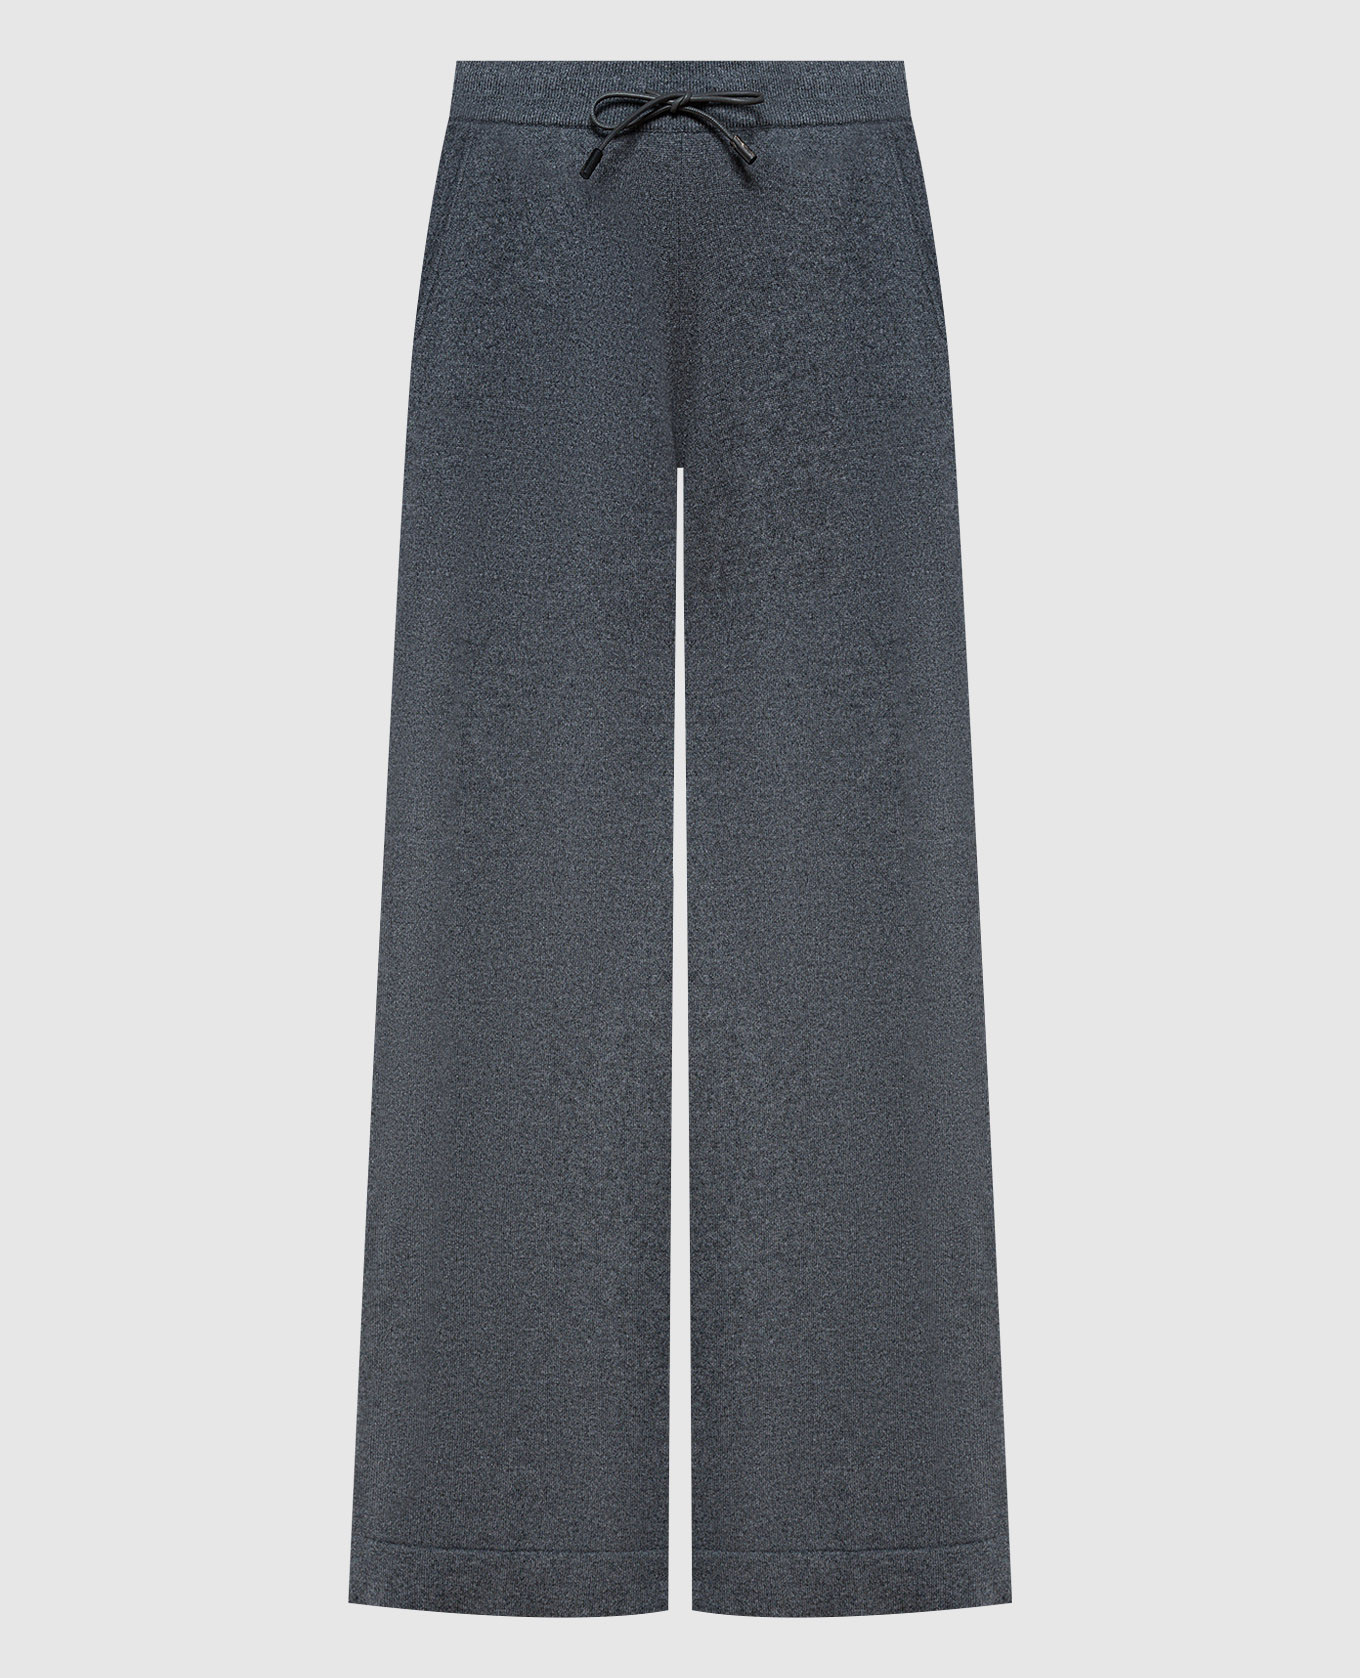 Gray cashmere pants